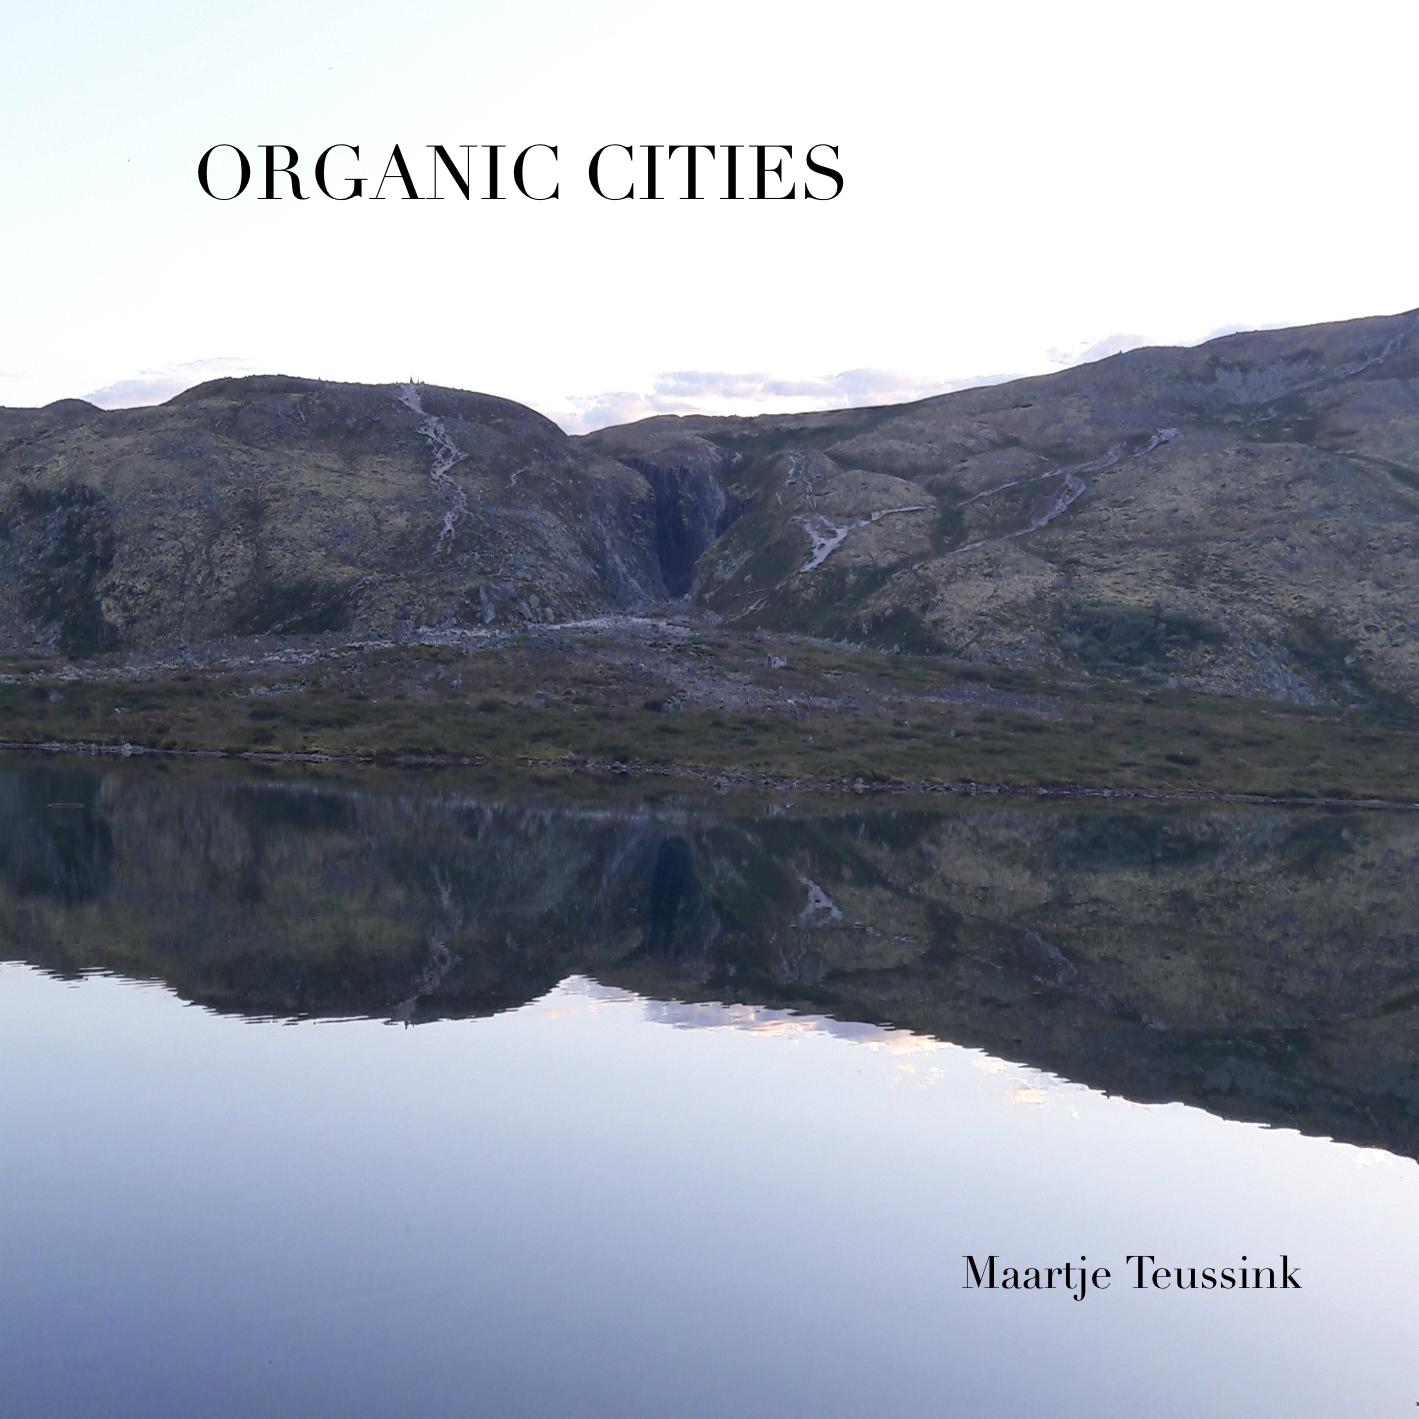 Artwork Organic Cities